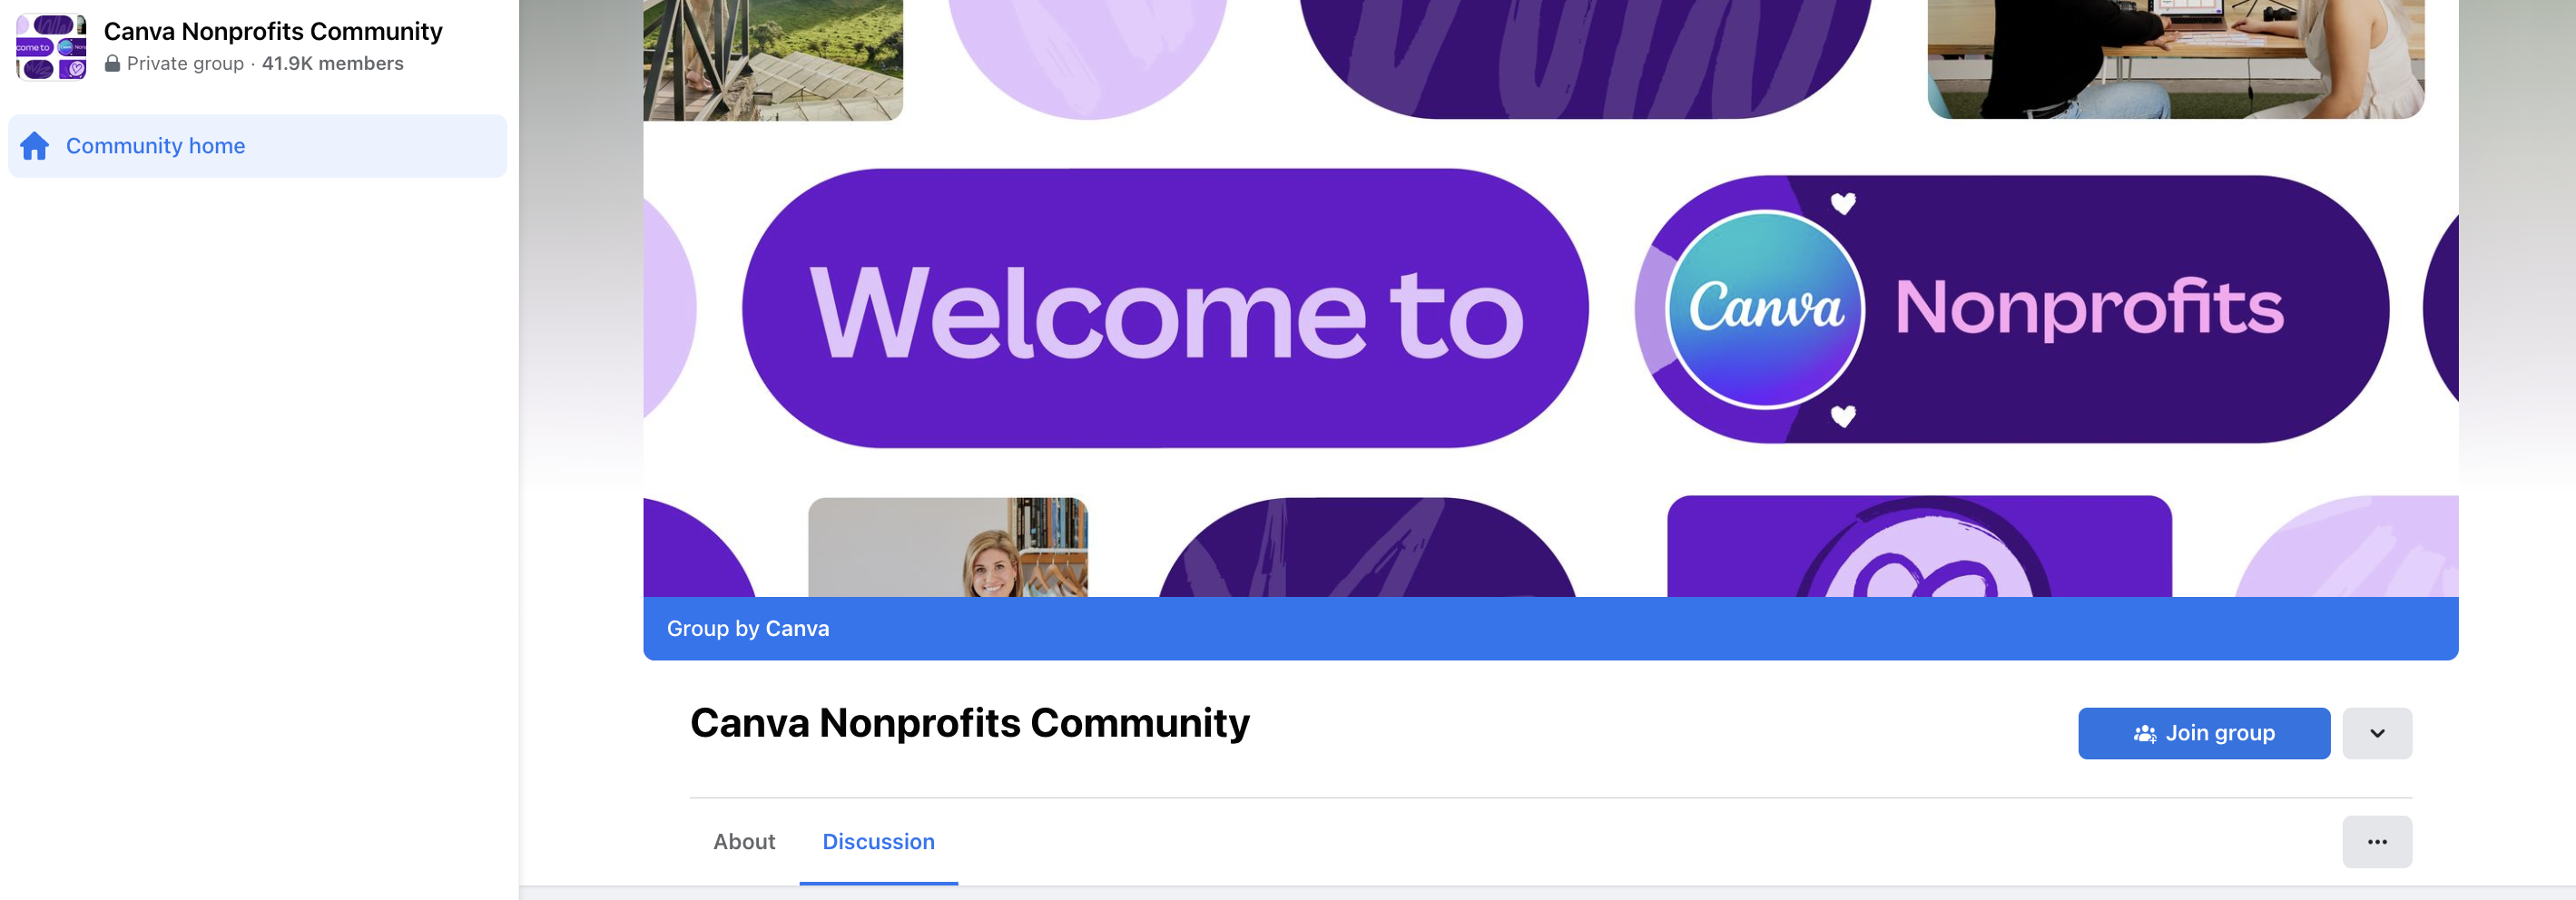 The Canva Nonprofits Community on Facebook Groups